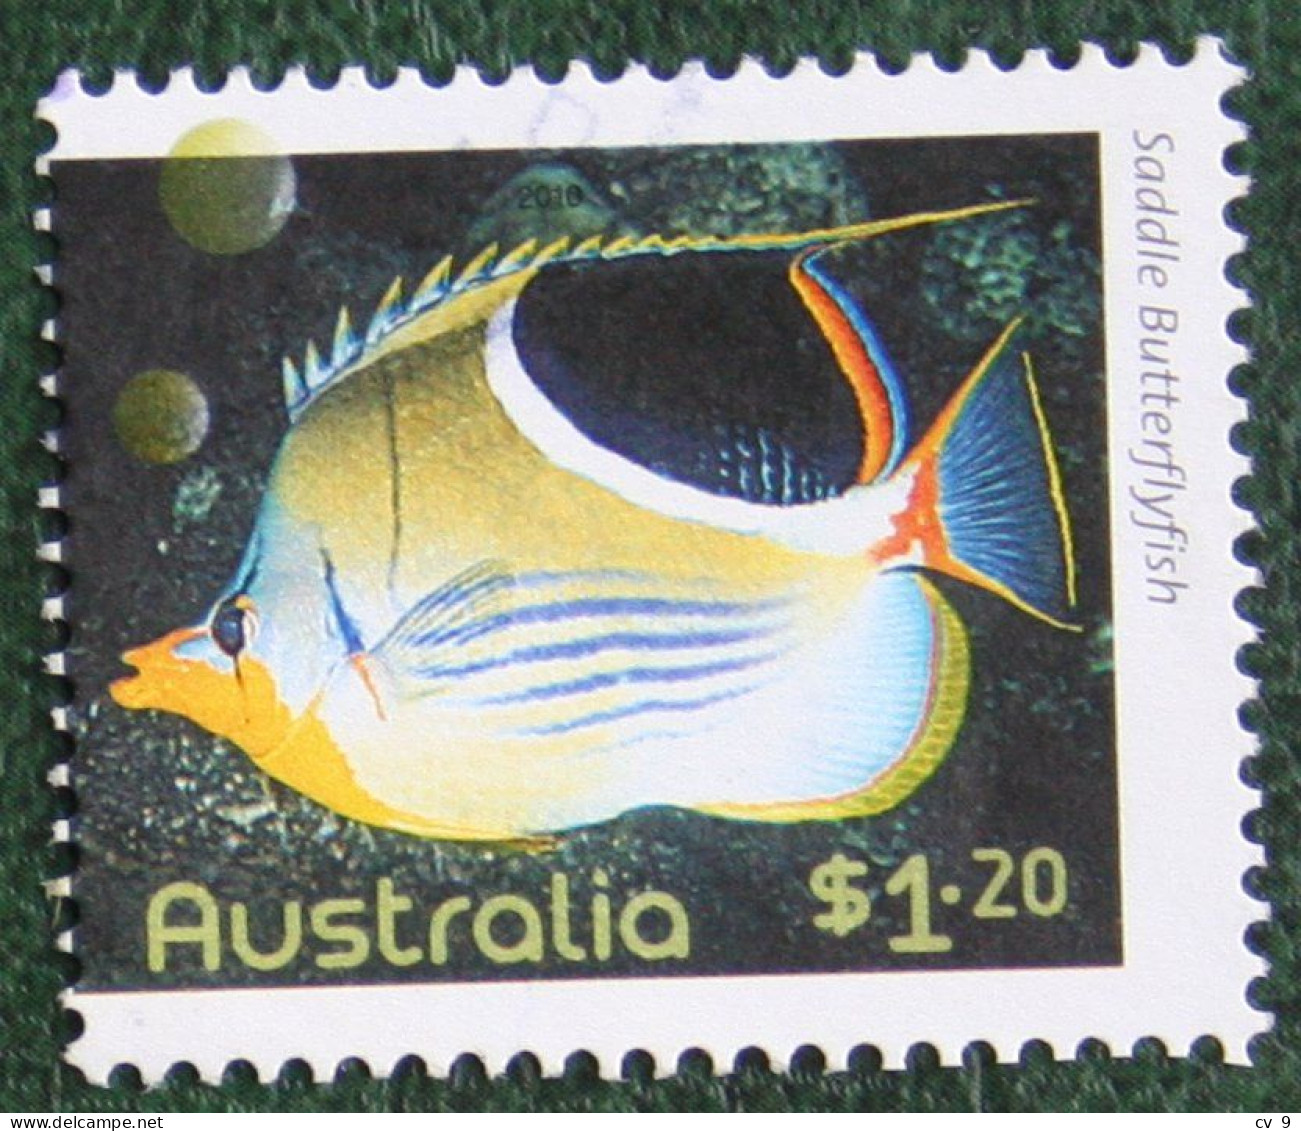 Tropical Fish FISHES OF THE REEF 2010 Mi 3497 Y&T - Used Gebruikt Oblitere Australia Australien Australie - Used Stamps